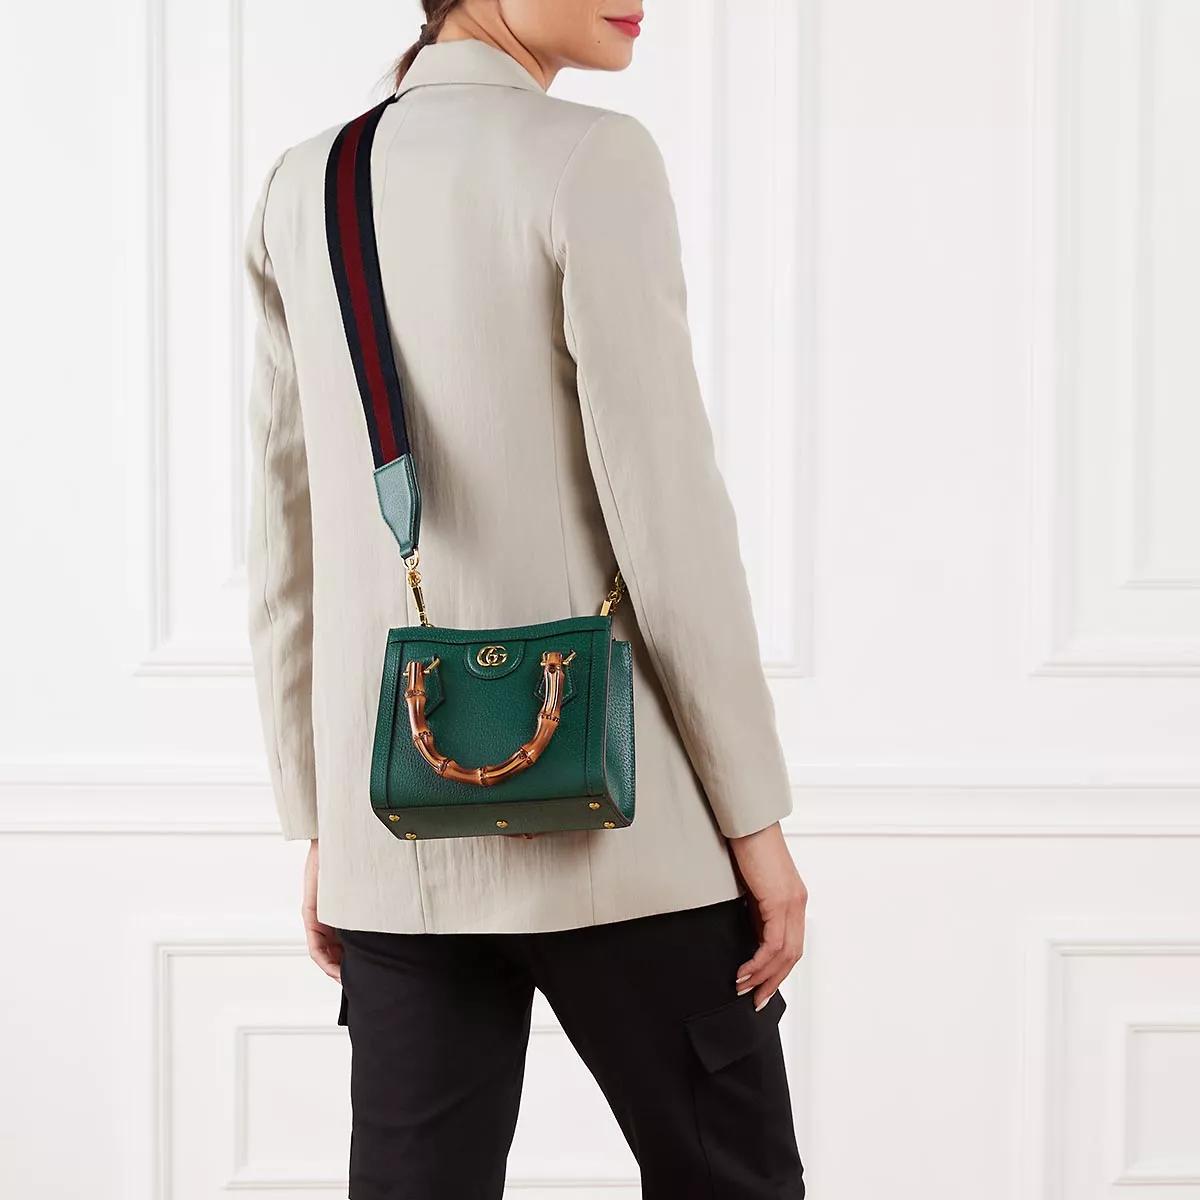 Gucci Totes Mini Diana Tote Bag in groen